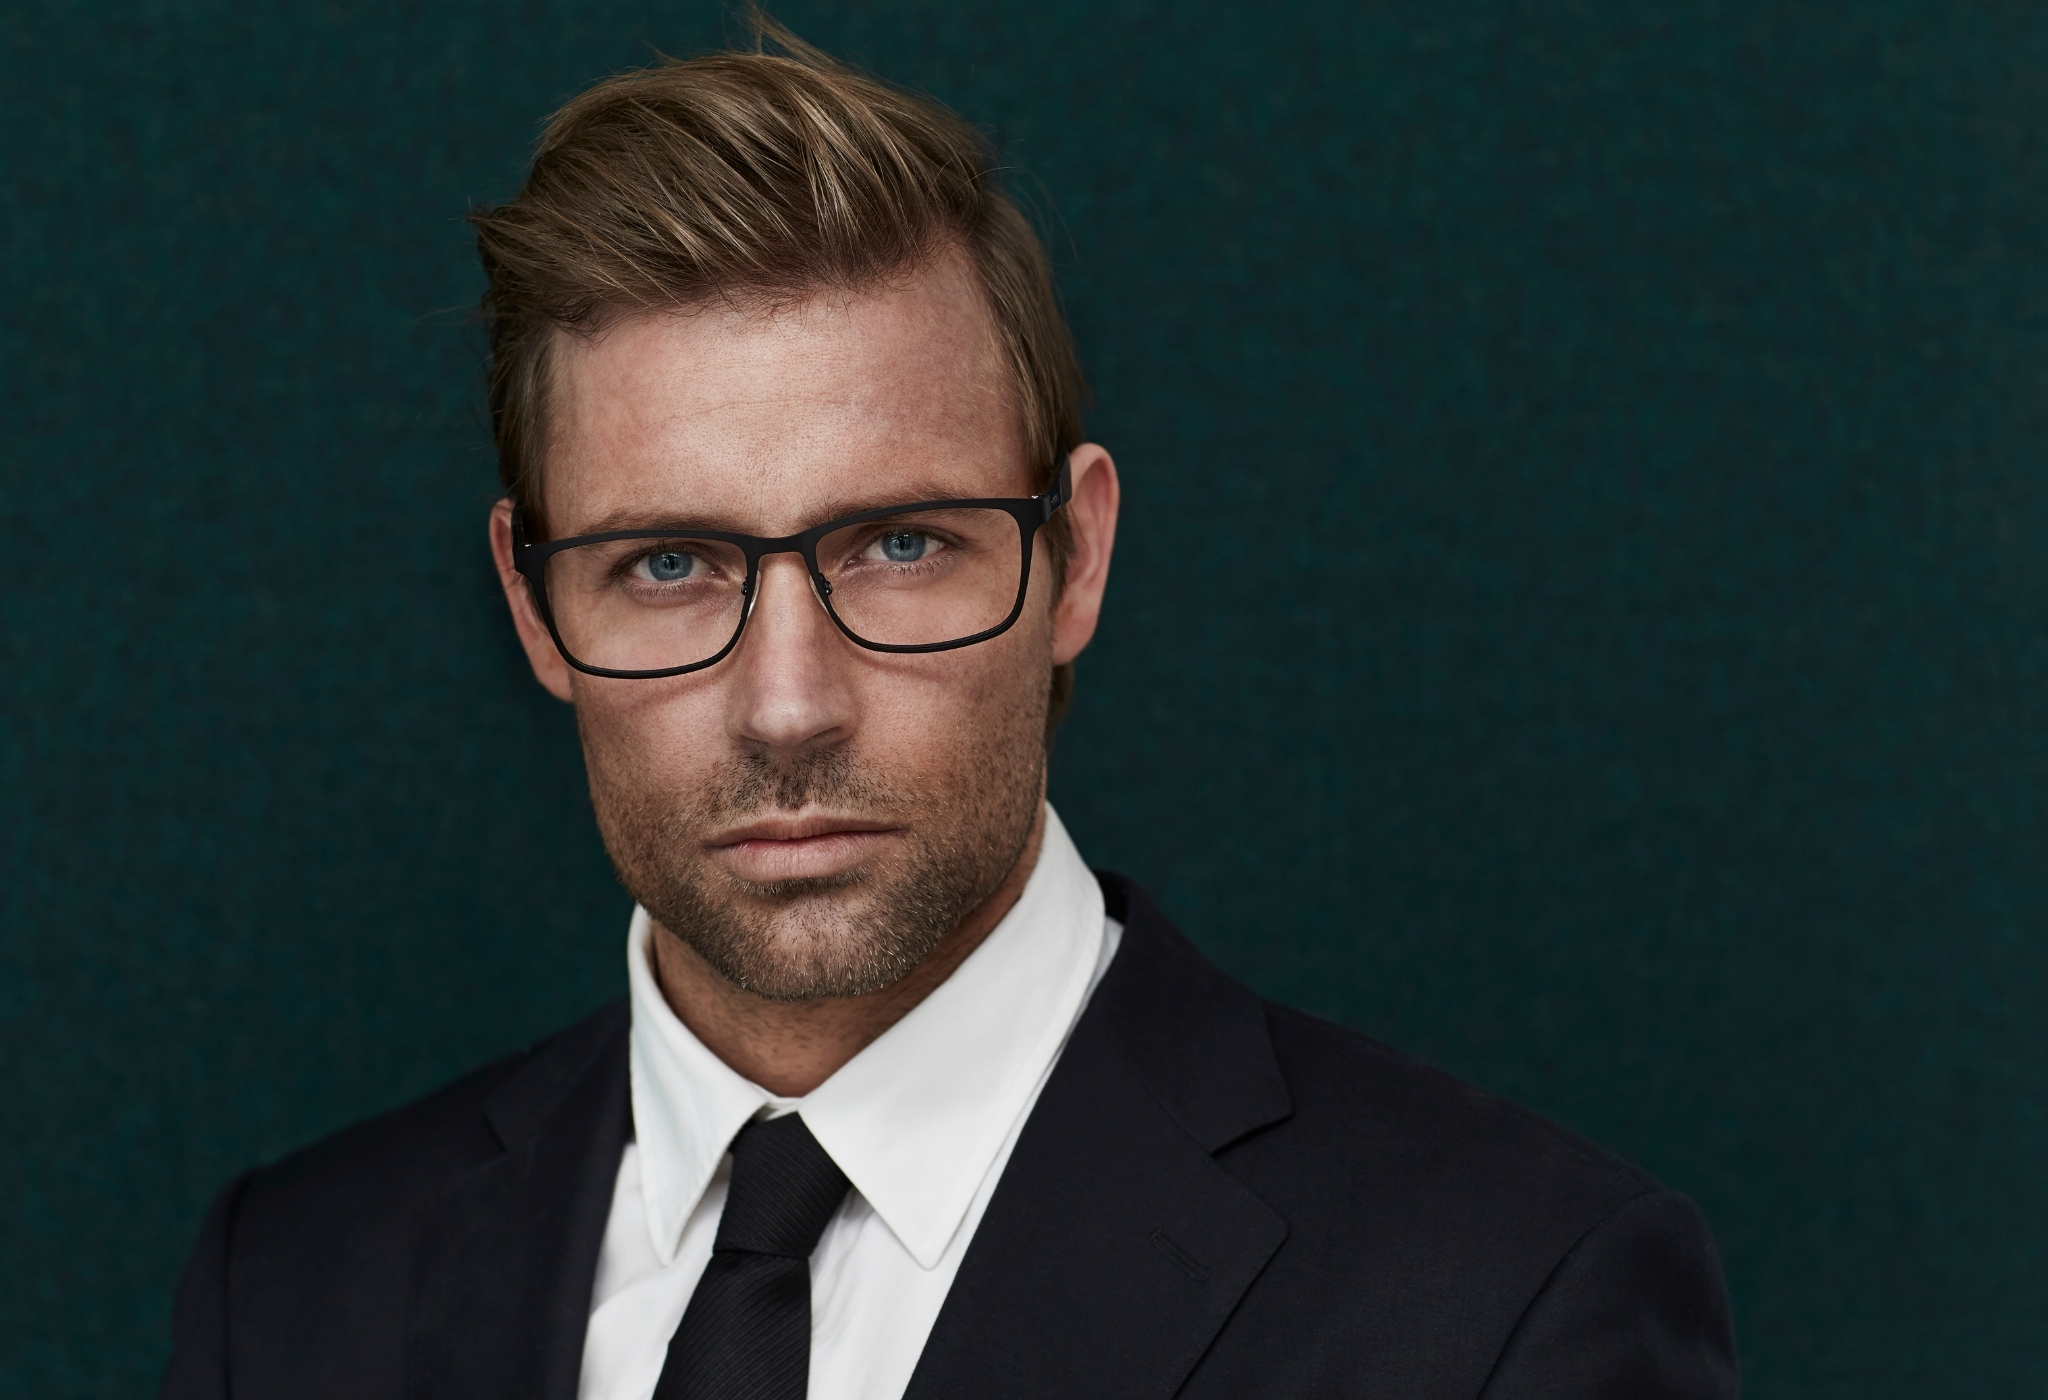 How To Look GREAT In Glasses (MEN) | Find The Men's Eyeglasses